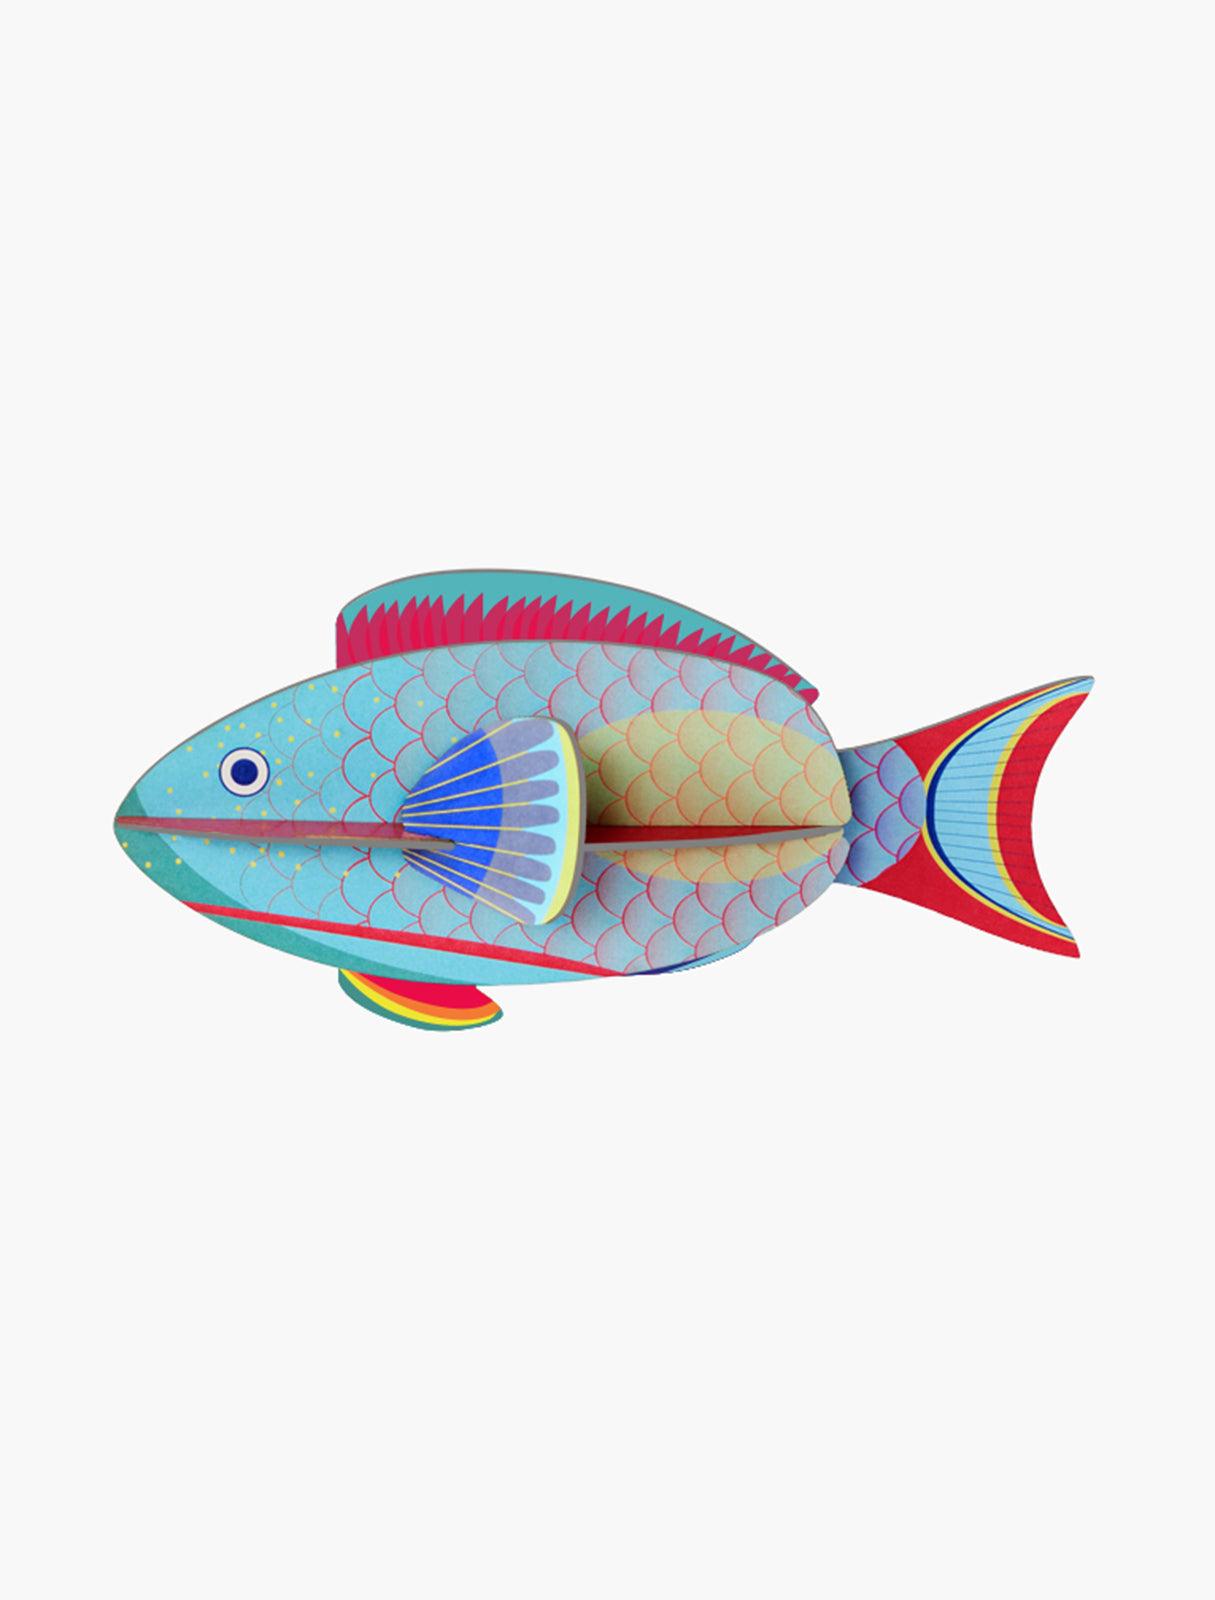 Parrot Fish - Gigglewick Gallery